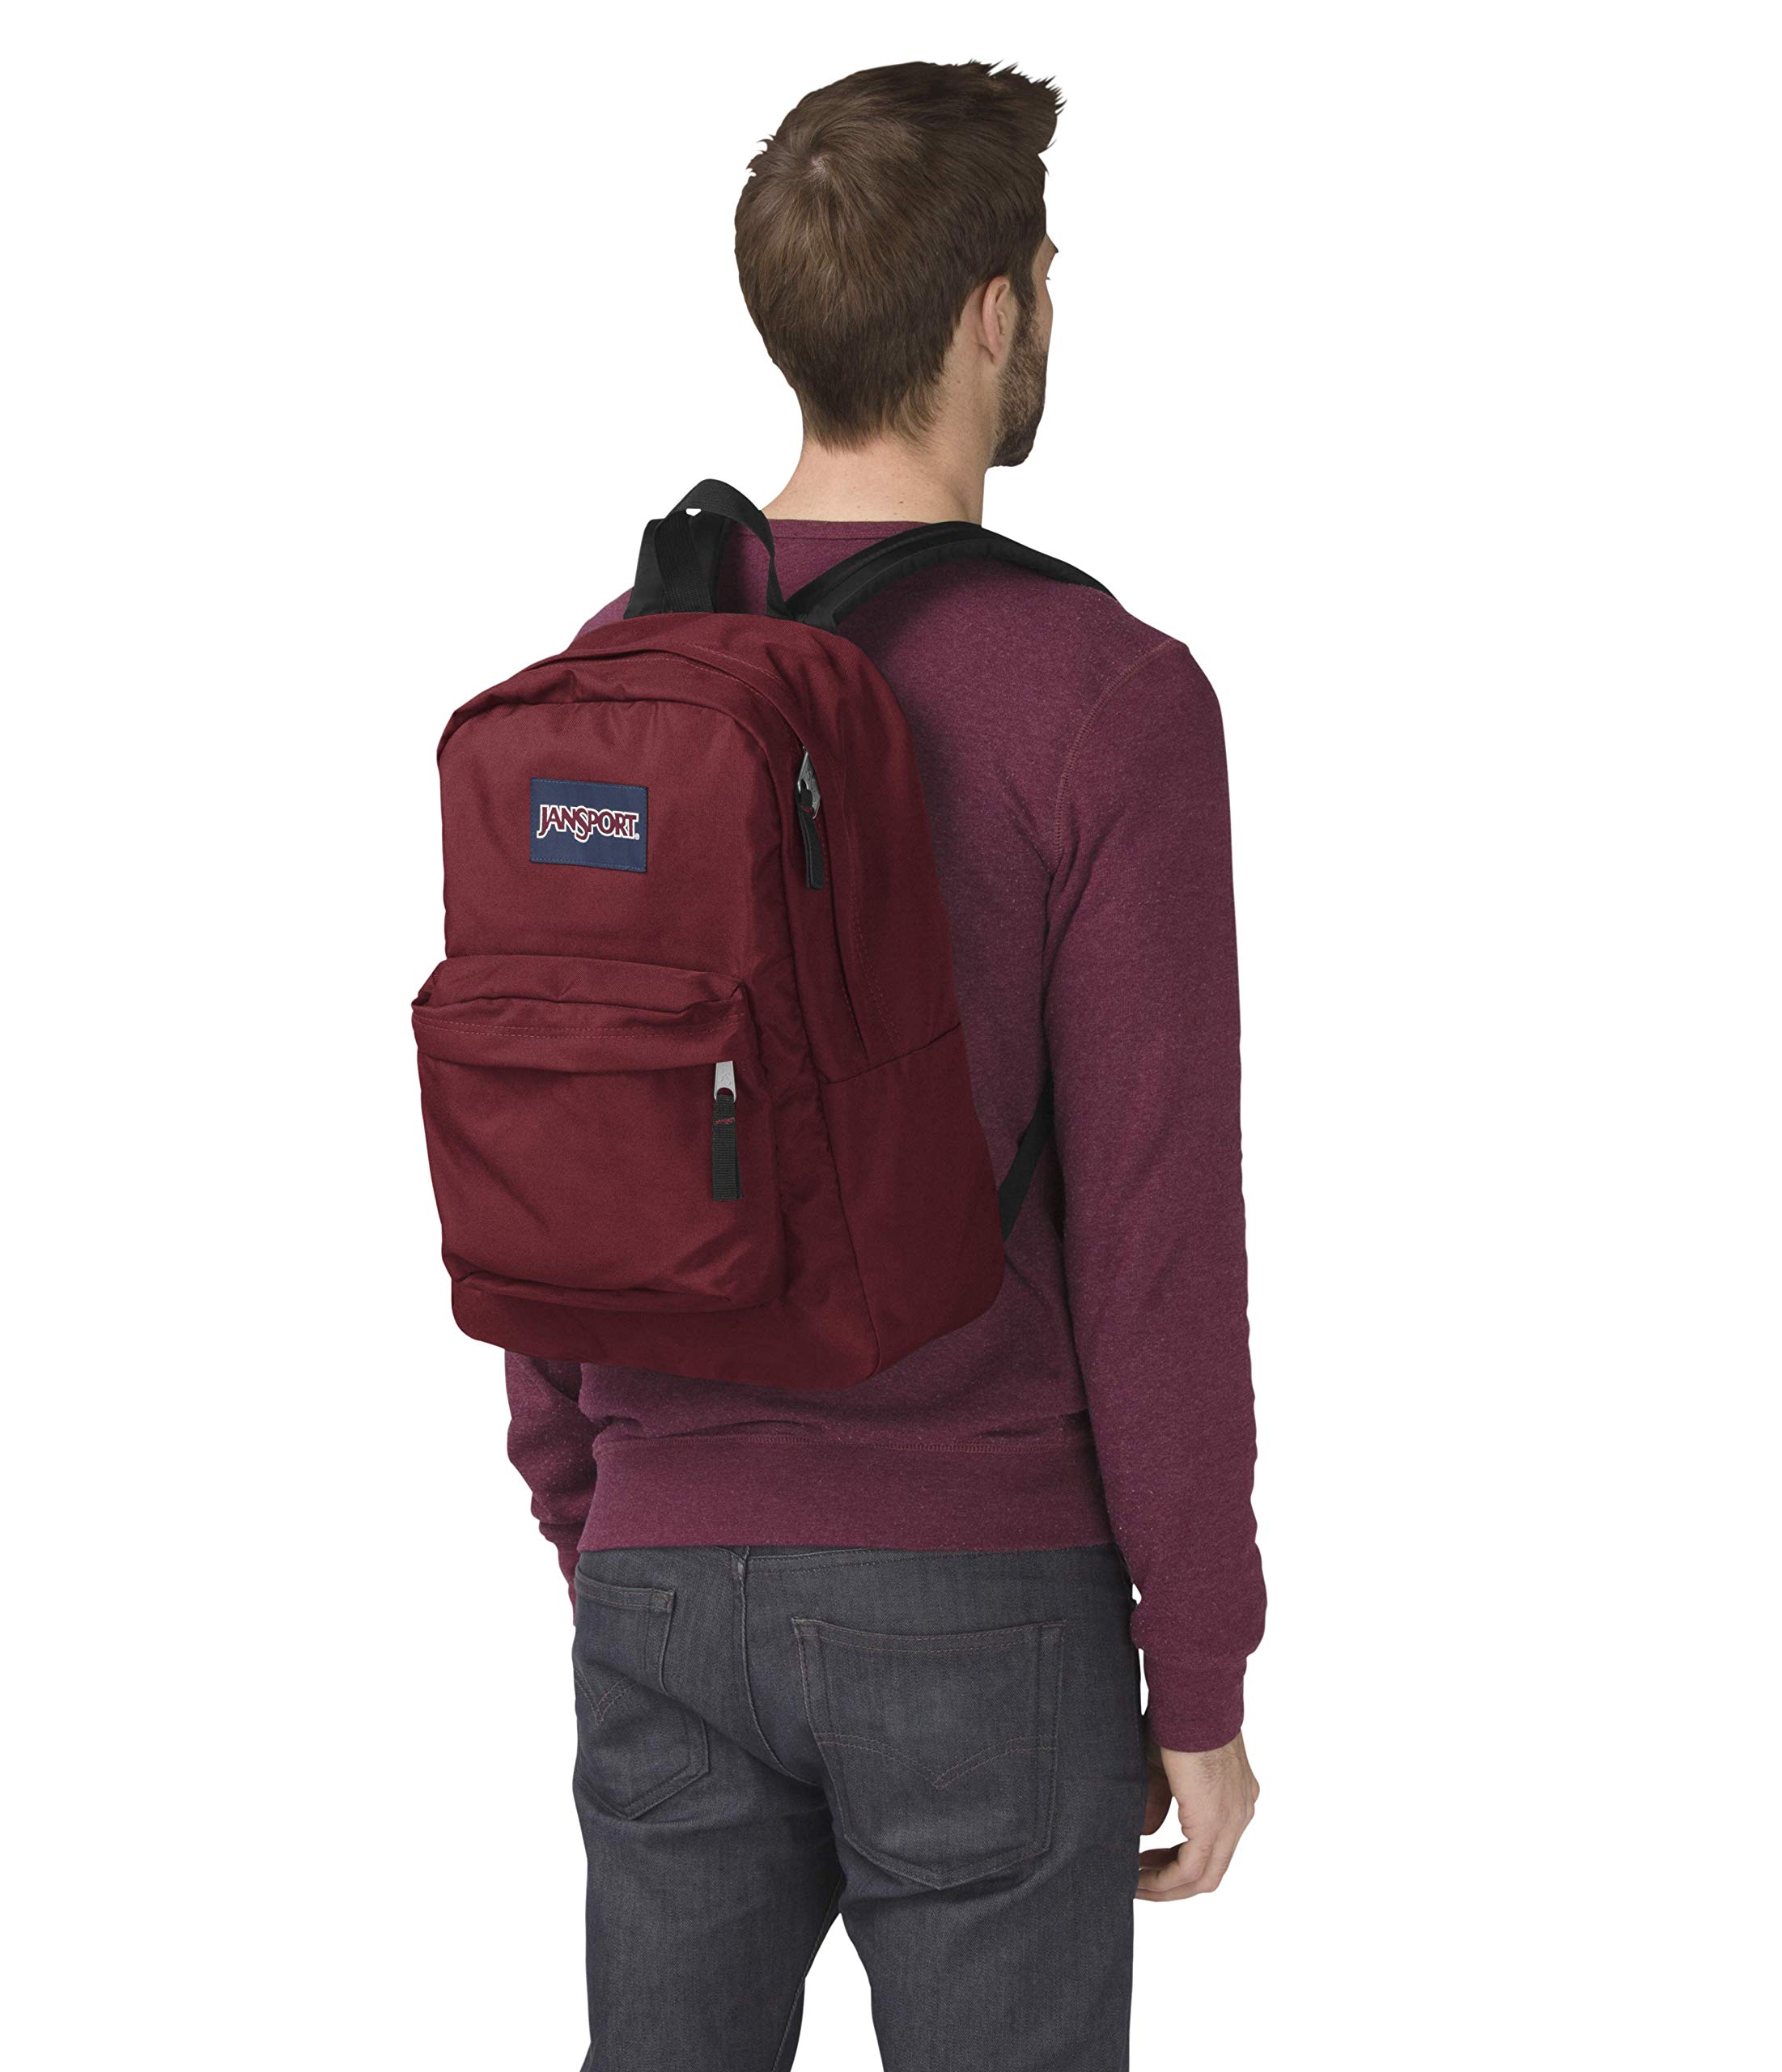 JanSport SuperBreak Classic Backpack Viking Red - image 4 of 7